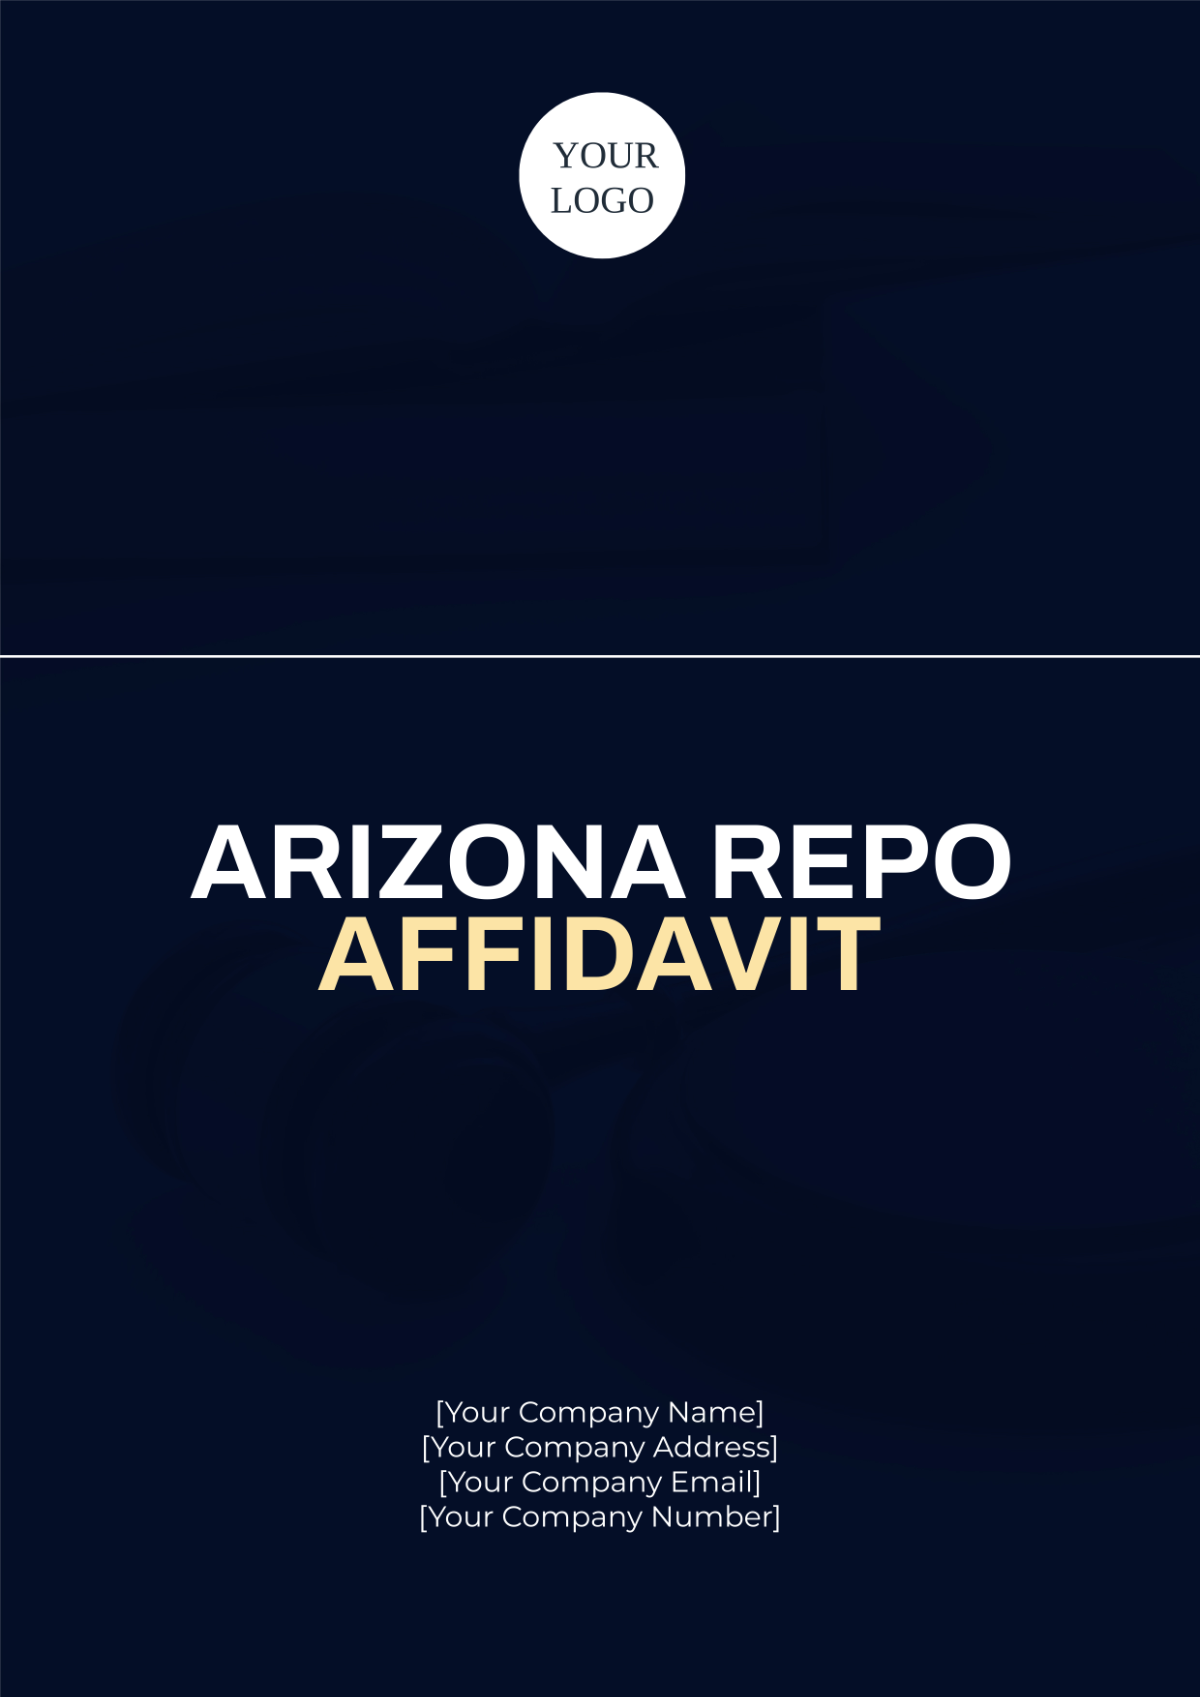 Arizona Repo Affidavit Cover Page